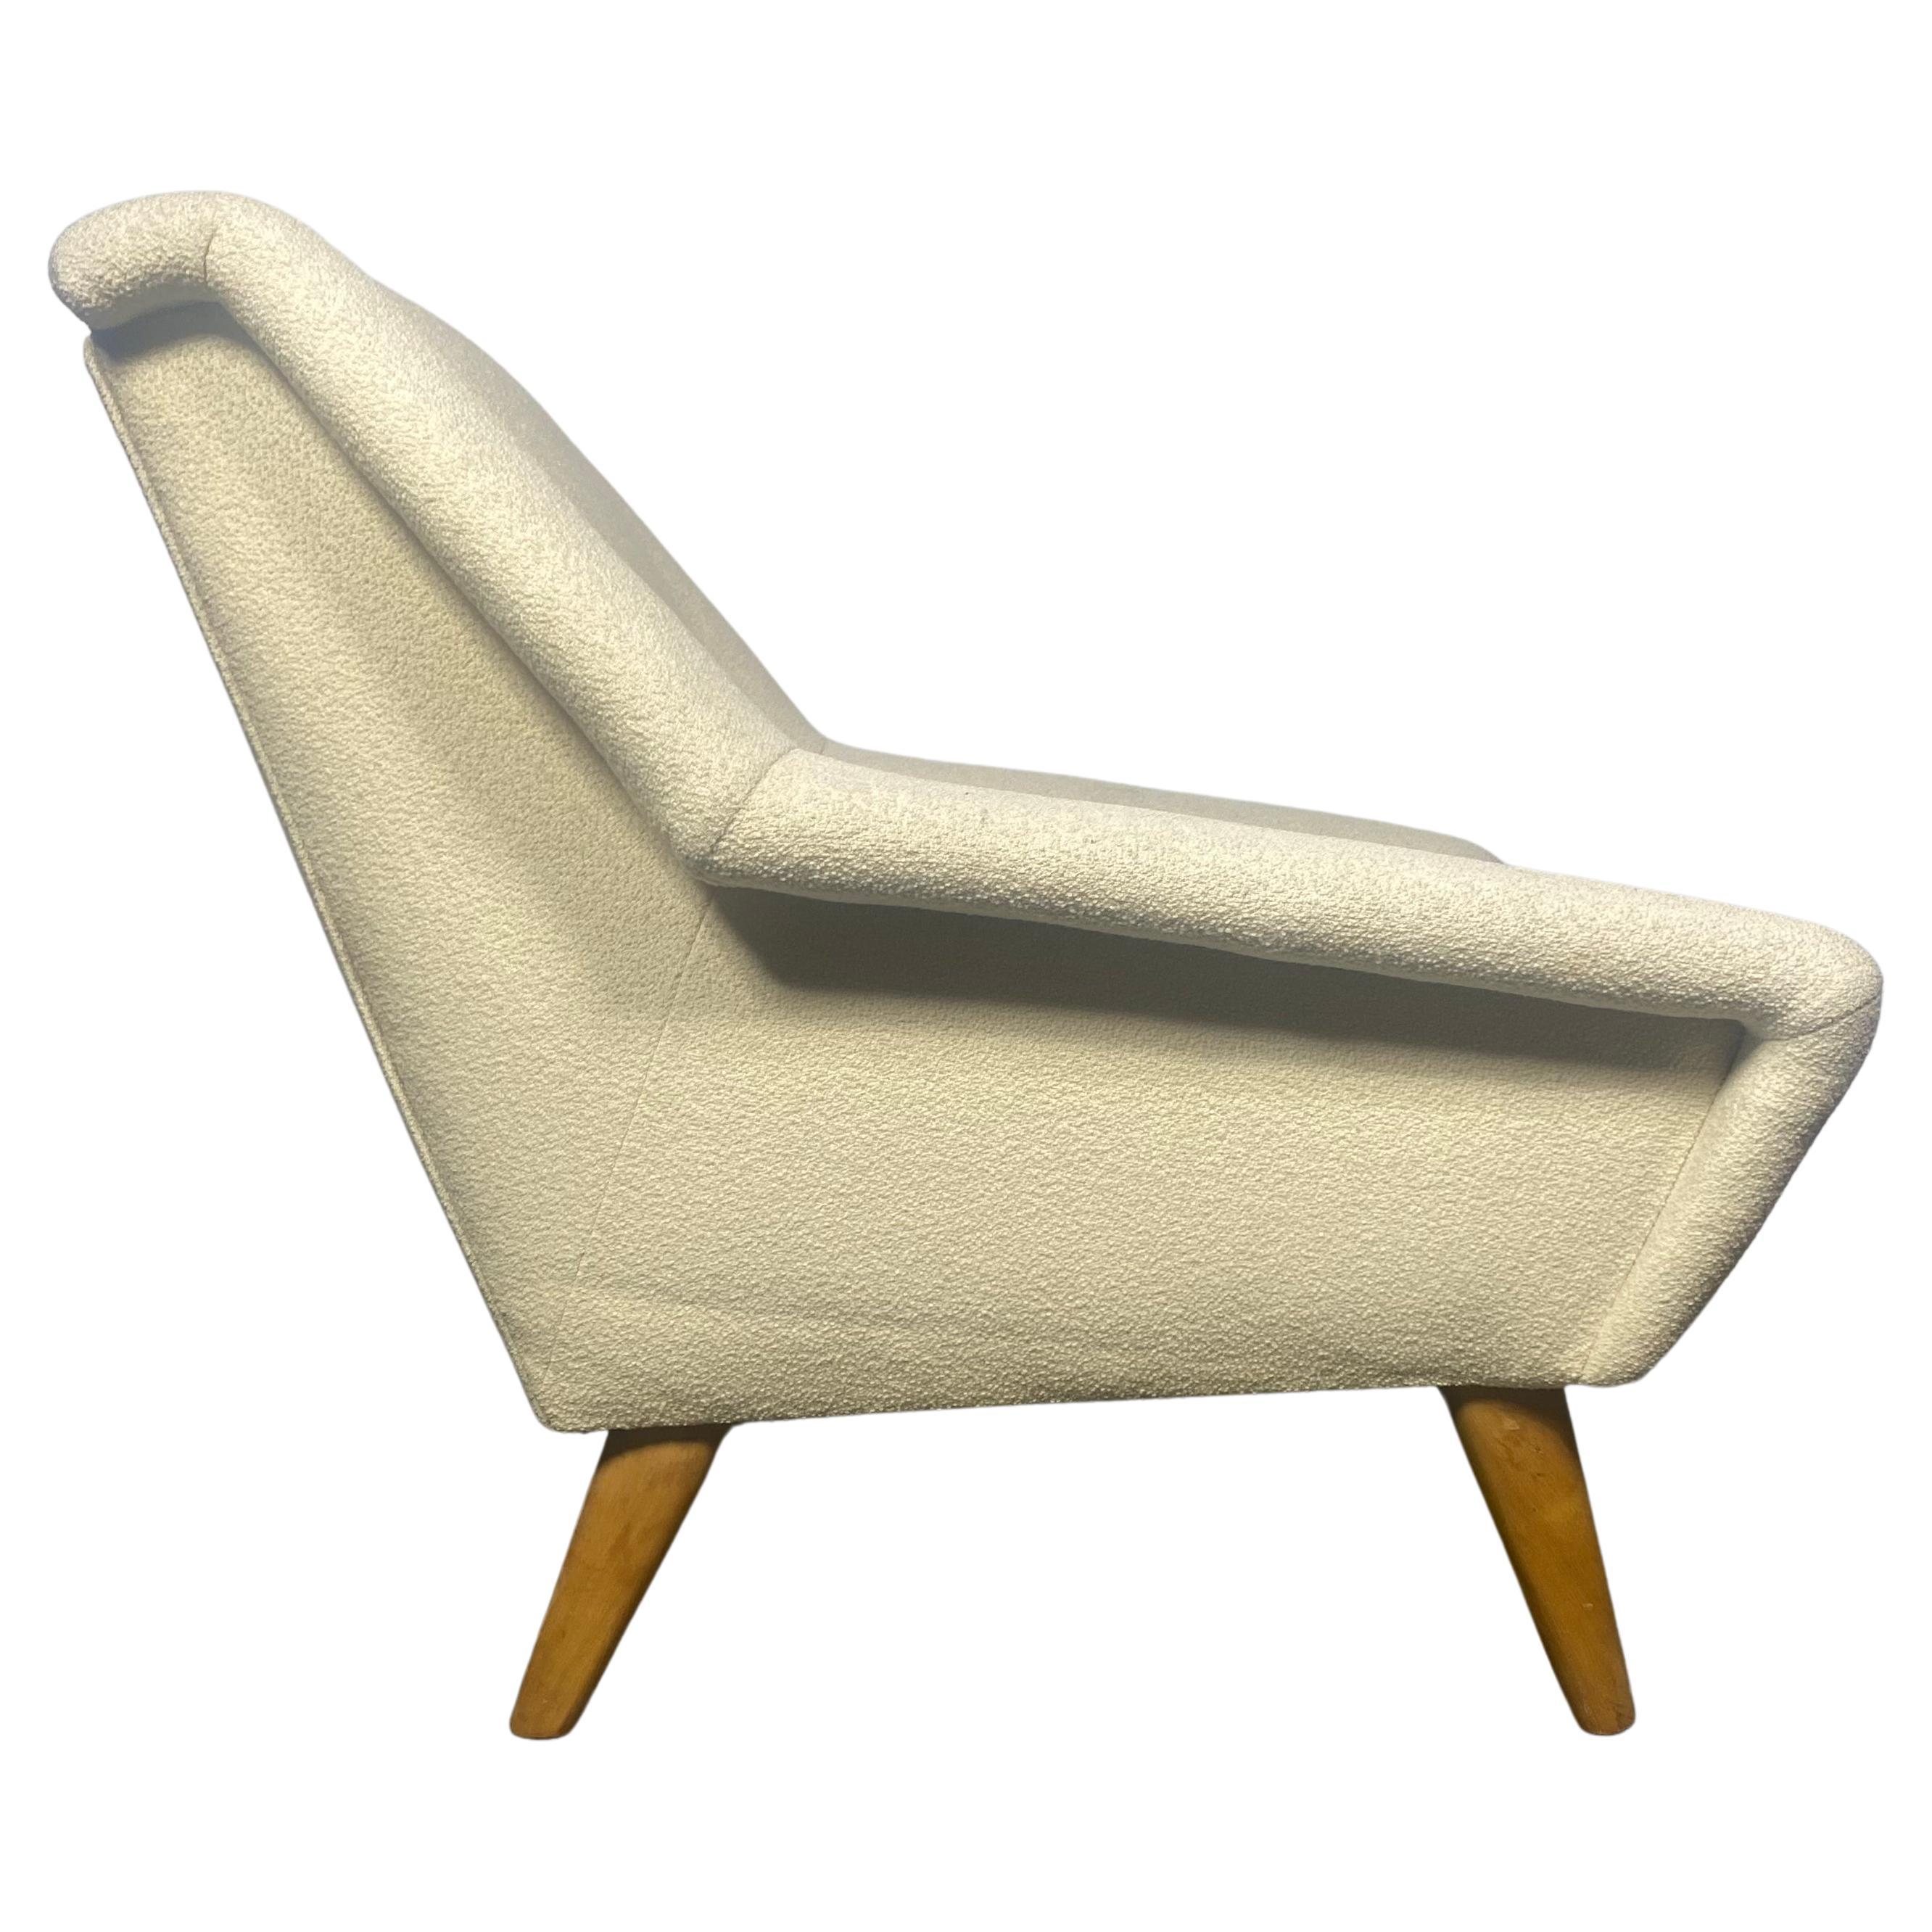 Classic Modernist Lounge Chair von Heywood Wakefield , nach Gio Ponti